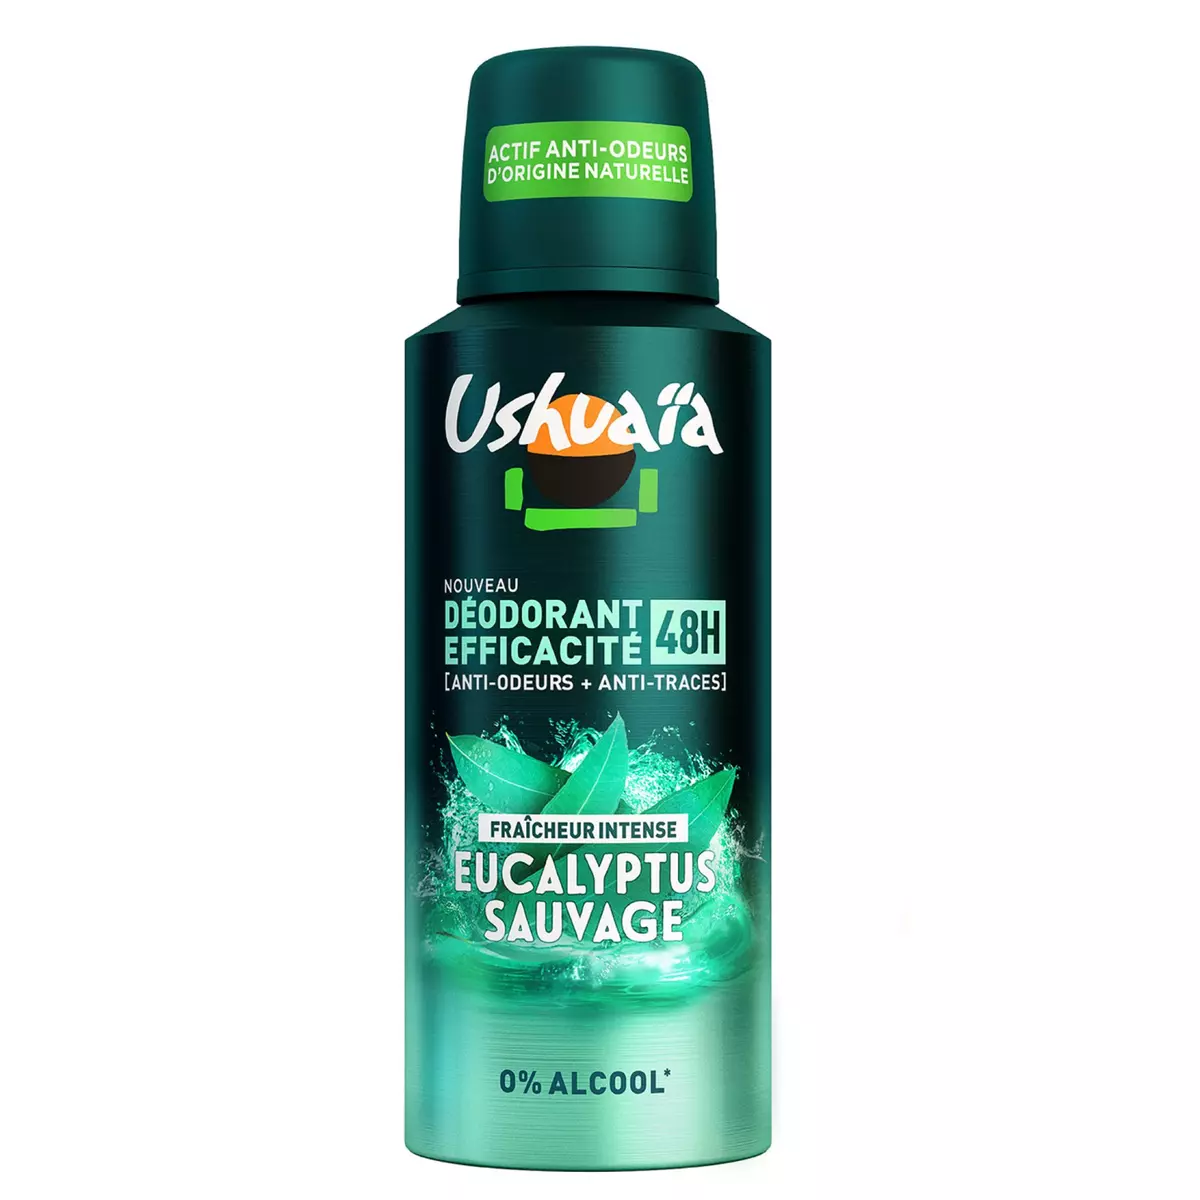 USHUAIA Déodorant spray 48h eucalyptus sauvage fraîcheur intense 150ml